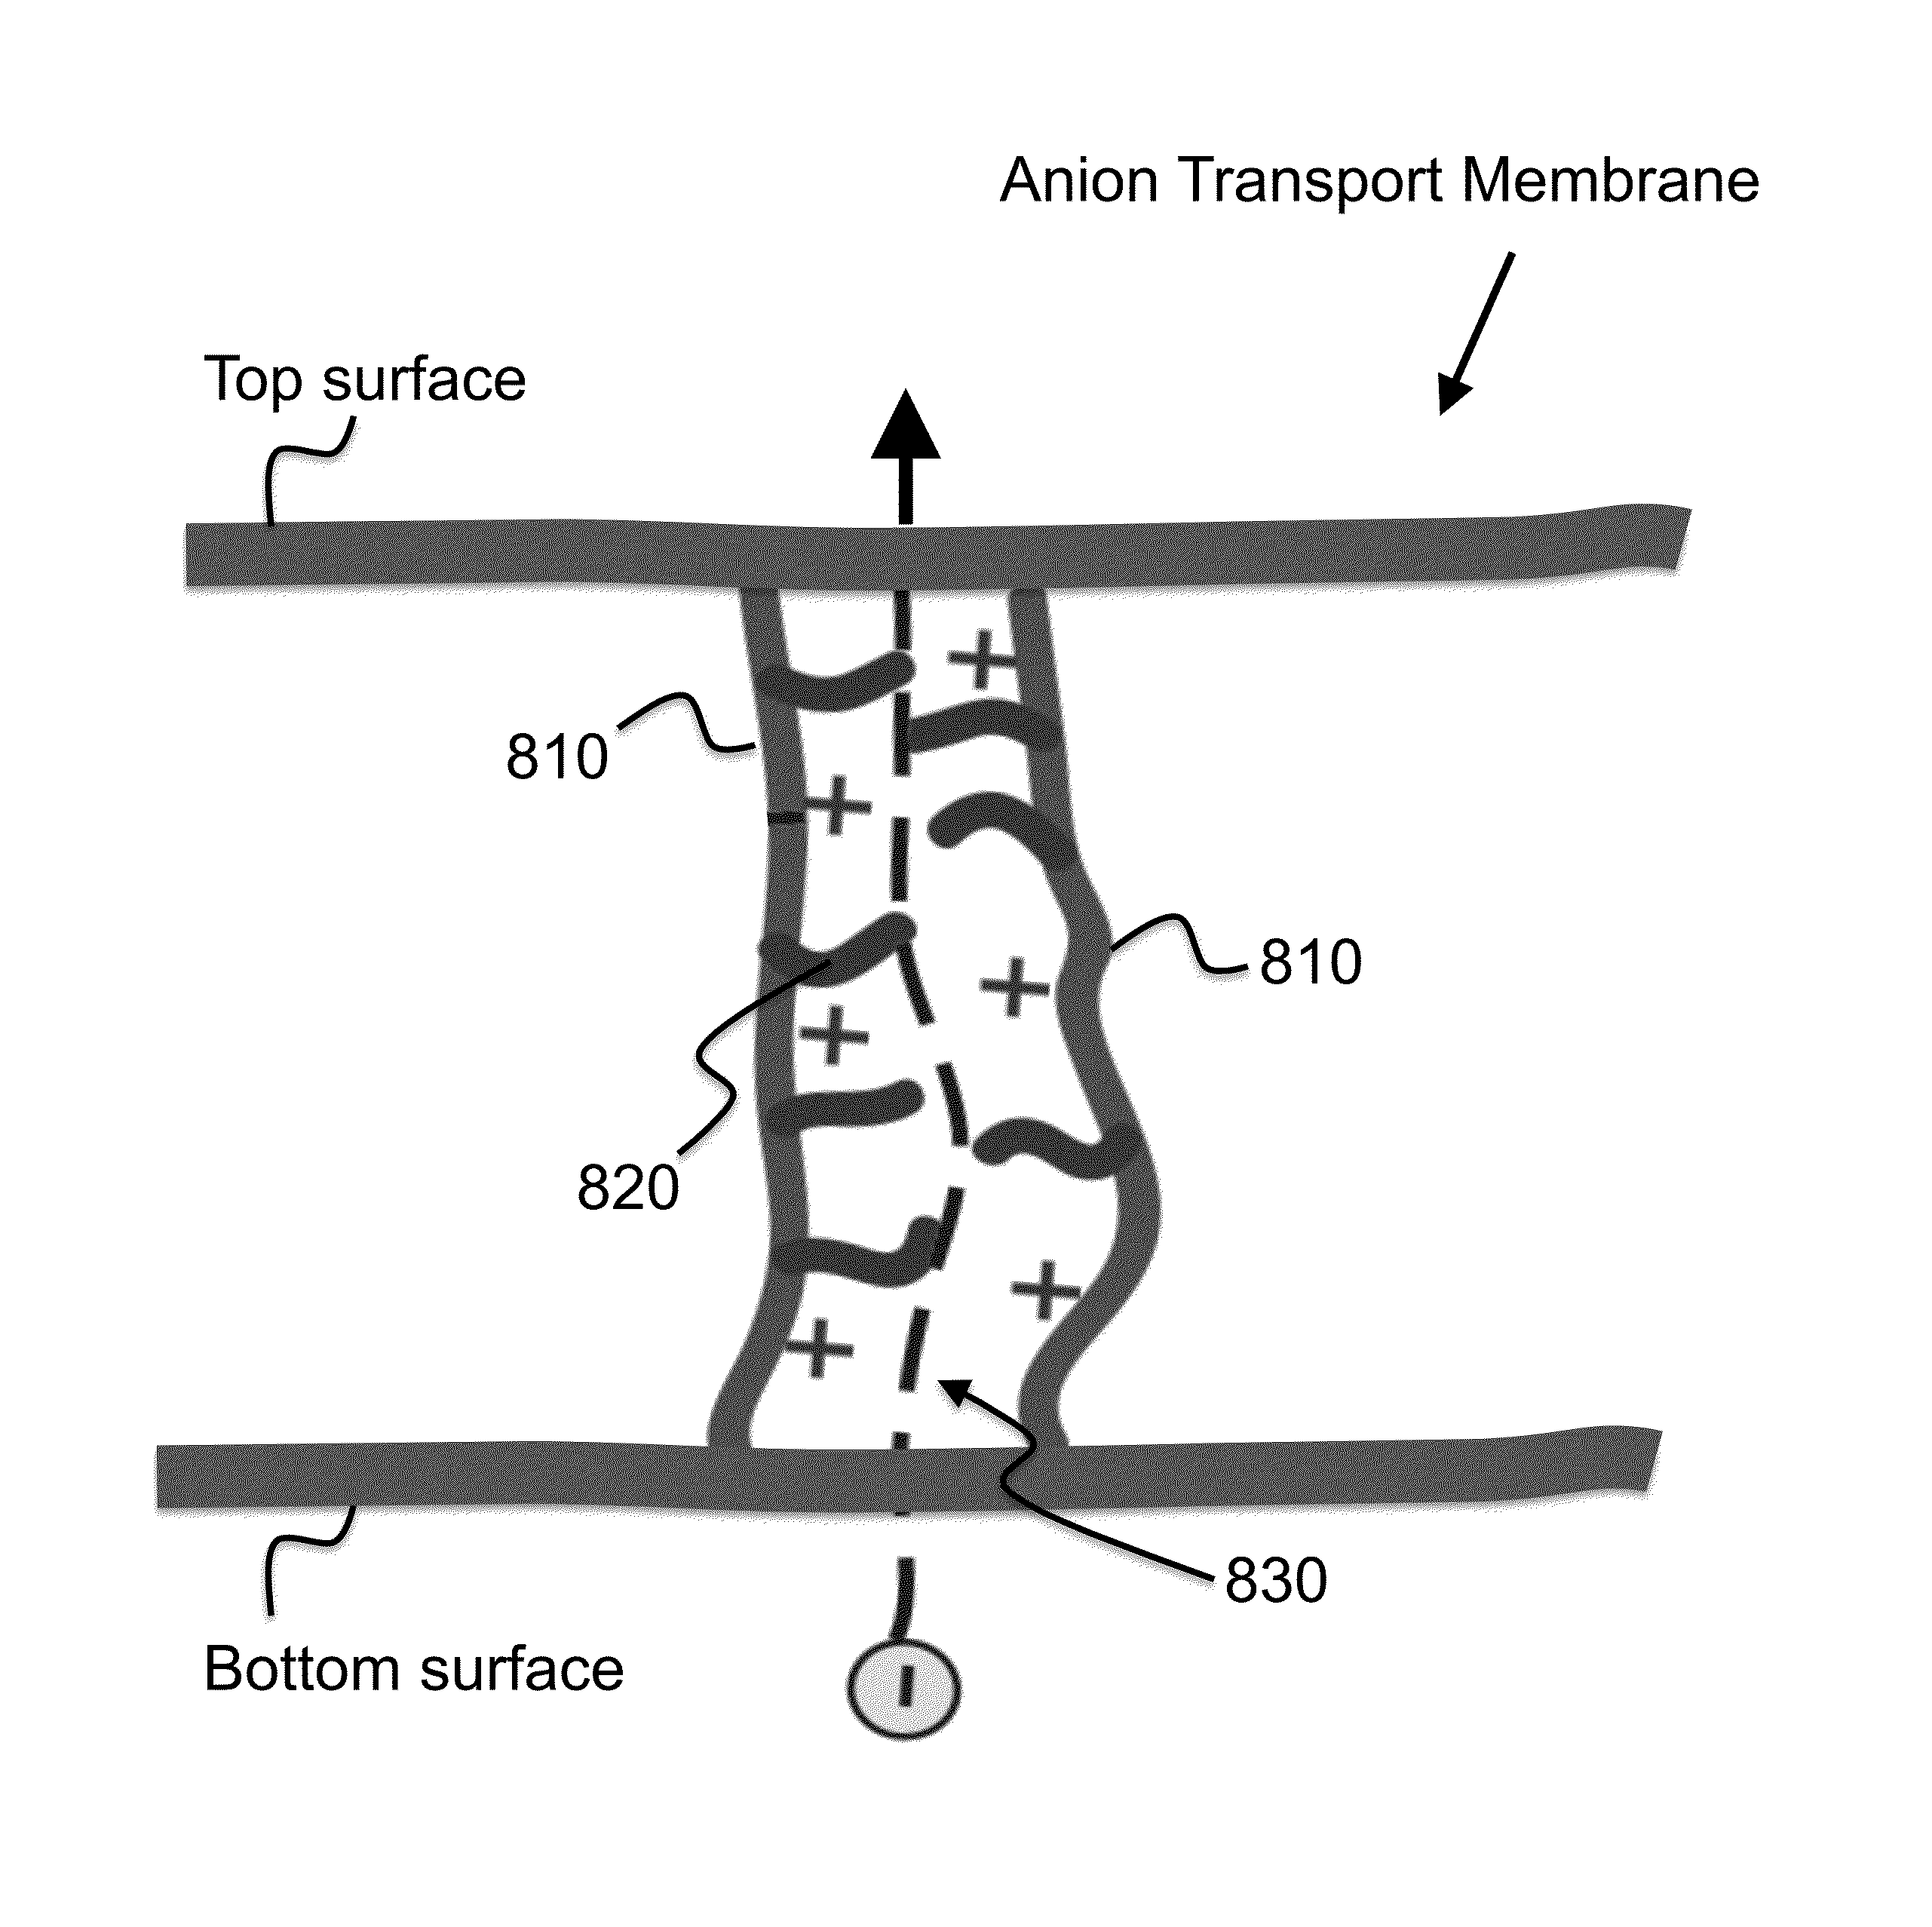 Anion transport membrane